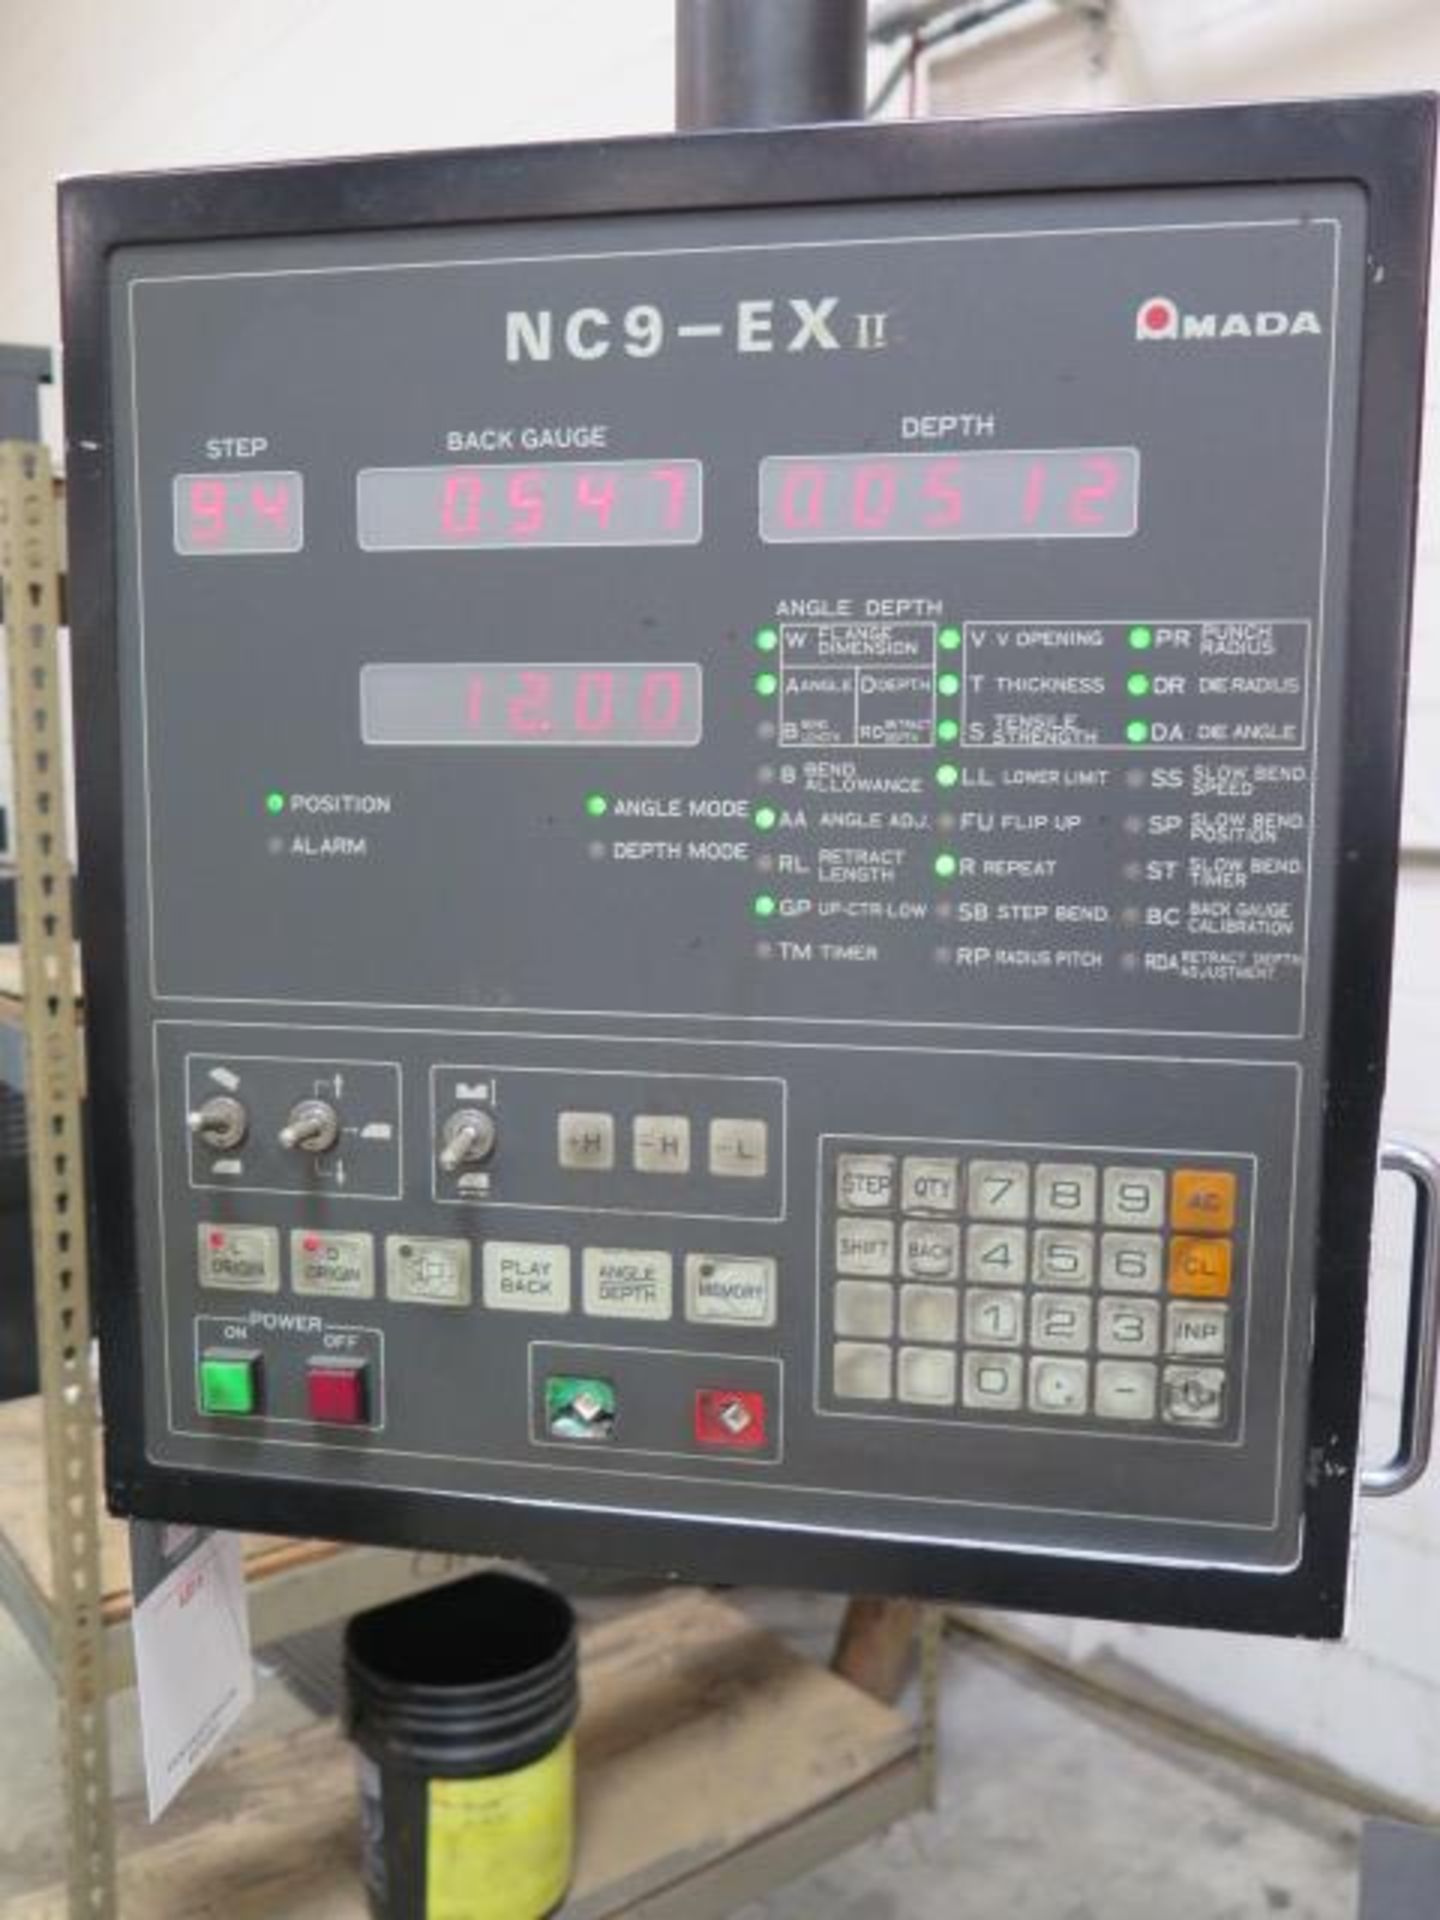 1998 Amada RG-35 35 Ton x 48” CNC Press Brake s/n 357000 w/ Amada NC9-EX II Controls, SOLD AS IS - Image 5 of 12